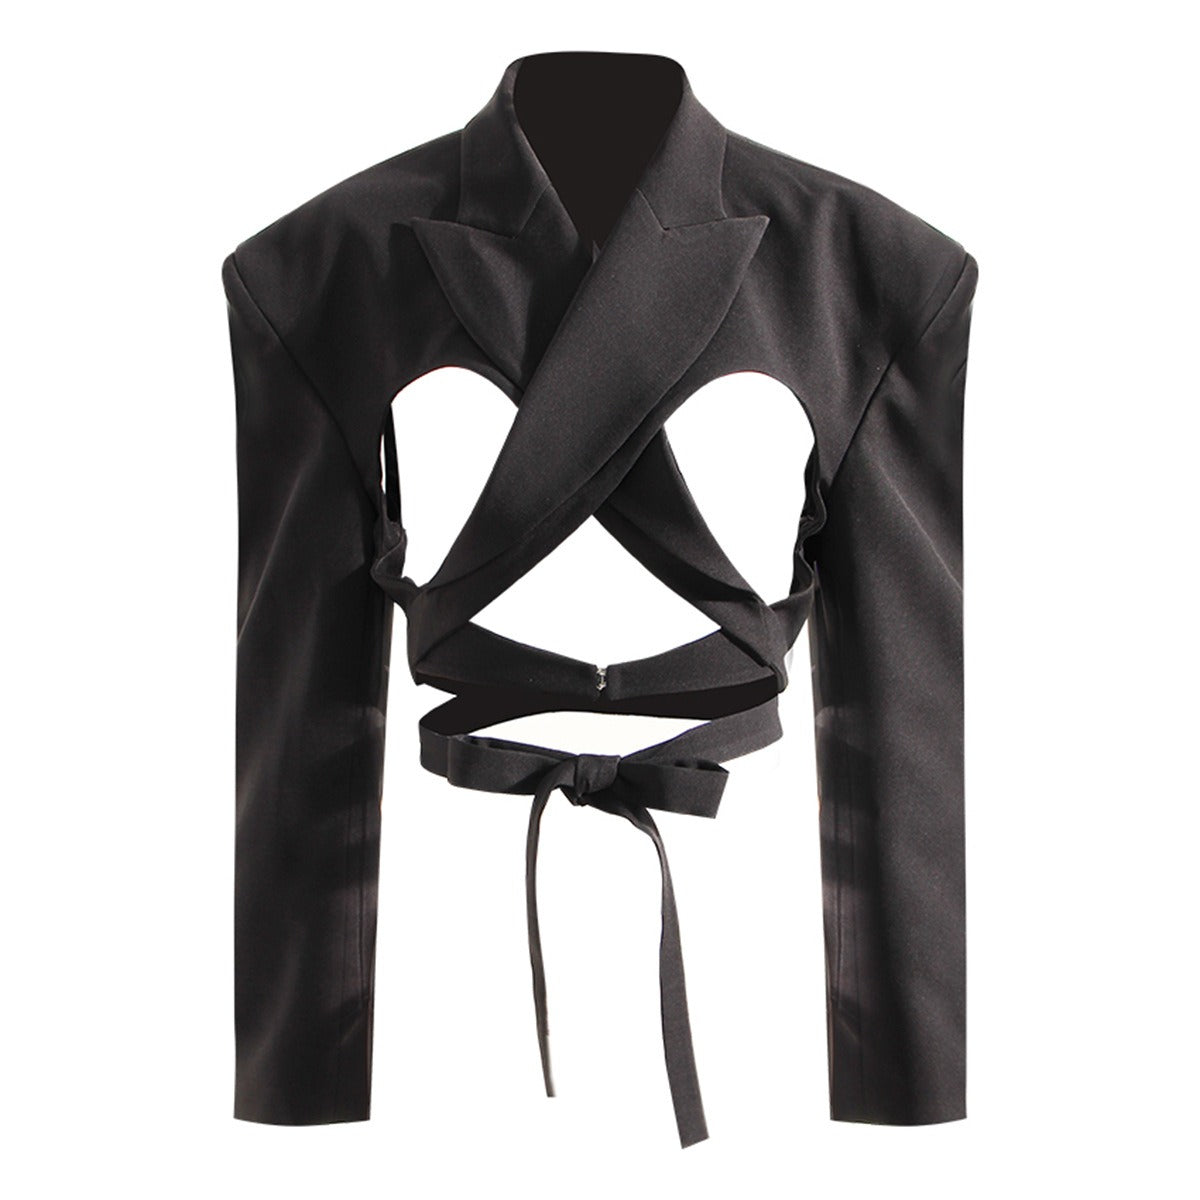 Modern Street Style, Cutout Backless Waist, Black Suit Coat